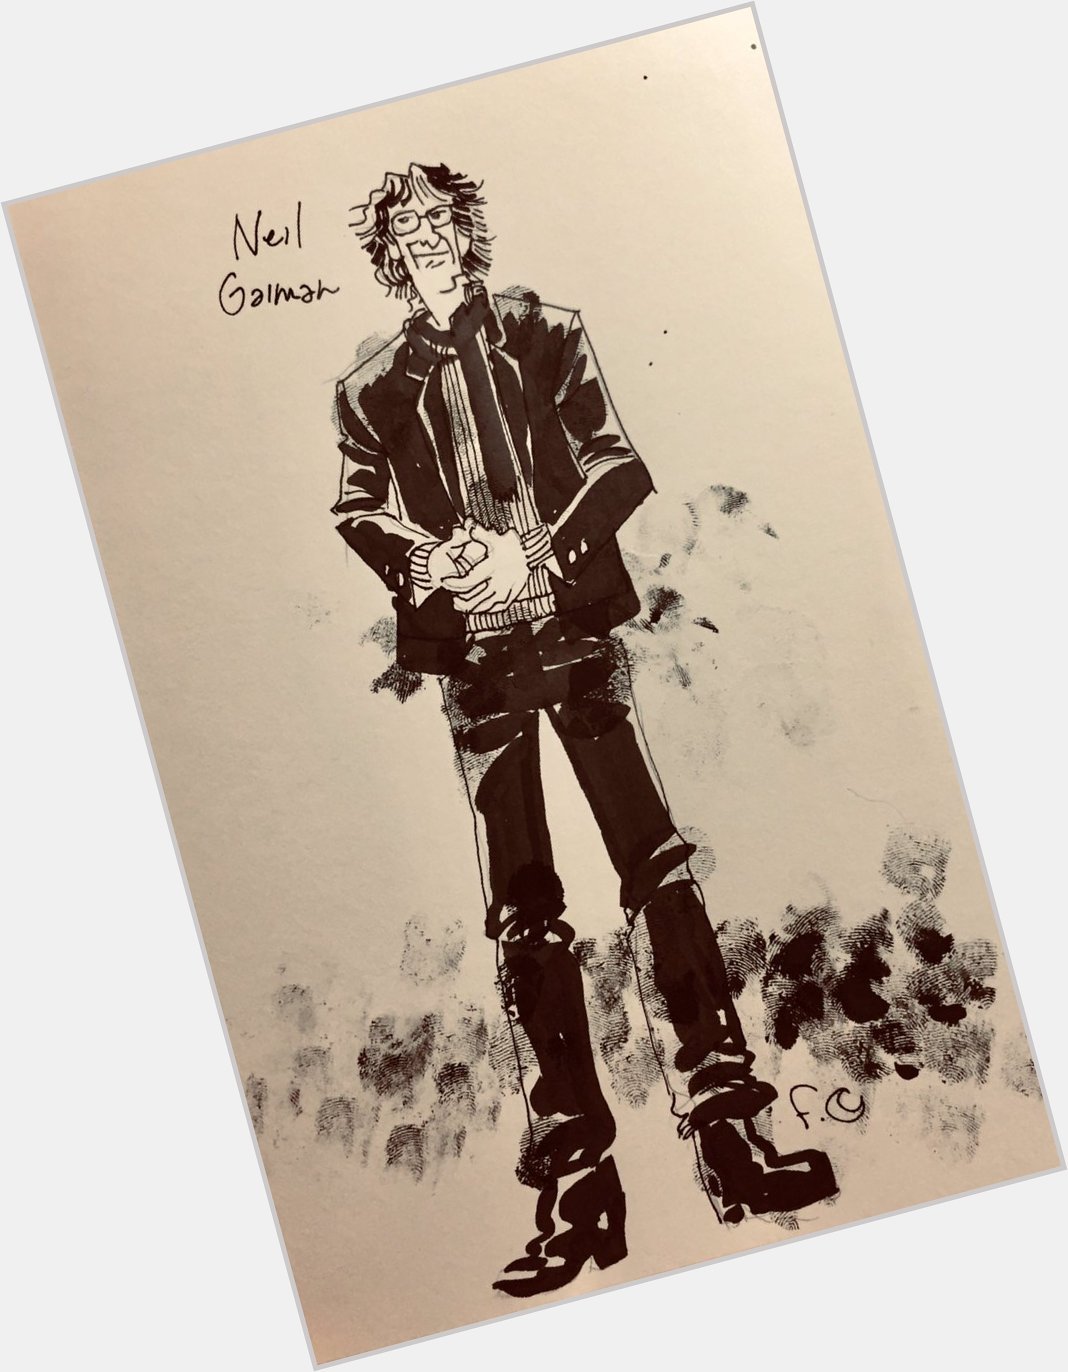 Happy birthday to the great Neil Gaiman. 